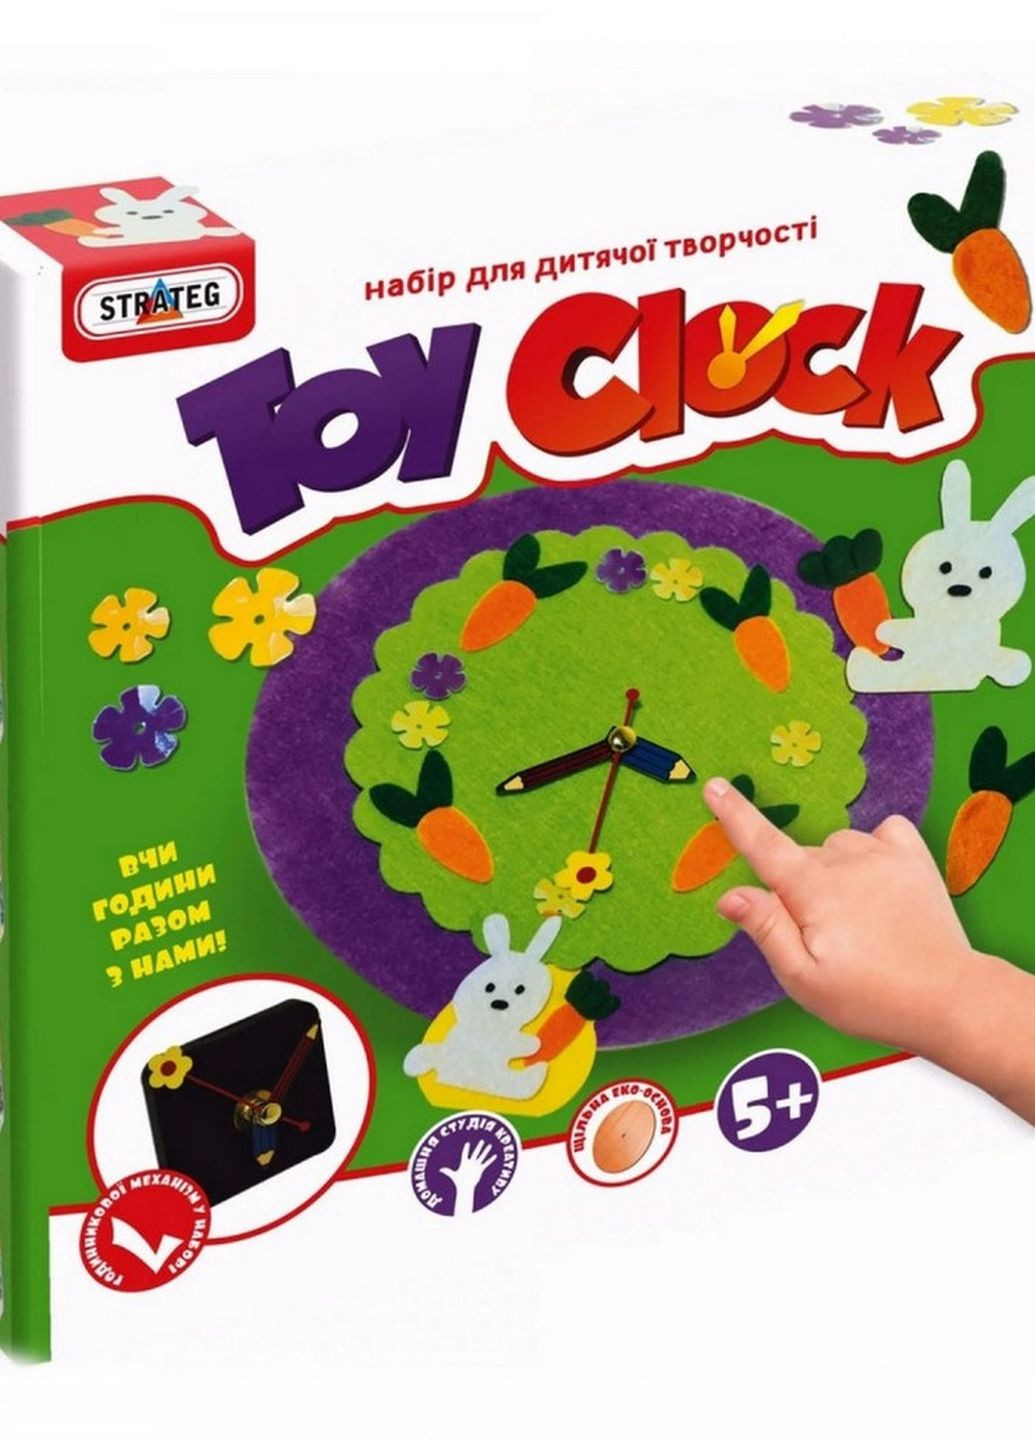 Набор для творчества "Toy clock - Заячья поляна" 15ST Strateg (277752825)